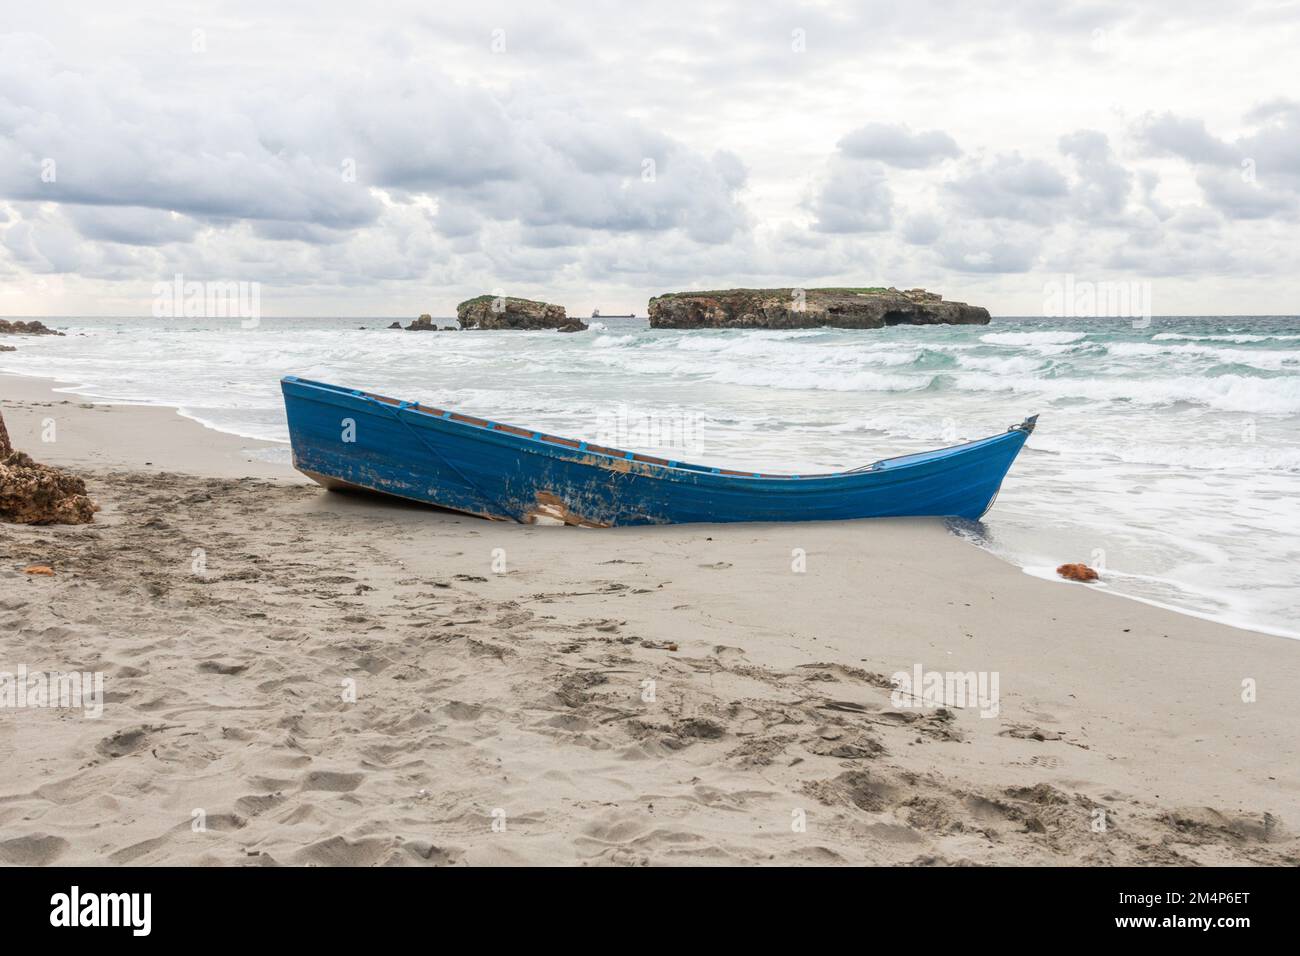 Old fishing boat stranded on beach, Bini Gaus, Menorca, Balearic islands, Spain. Stock Photo